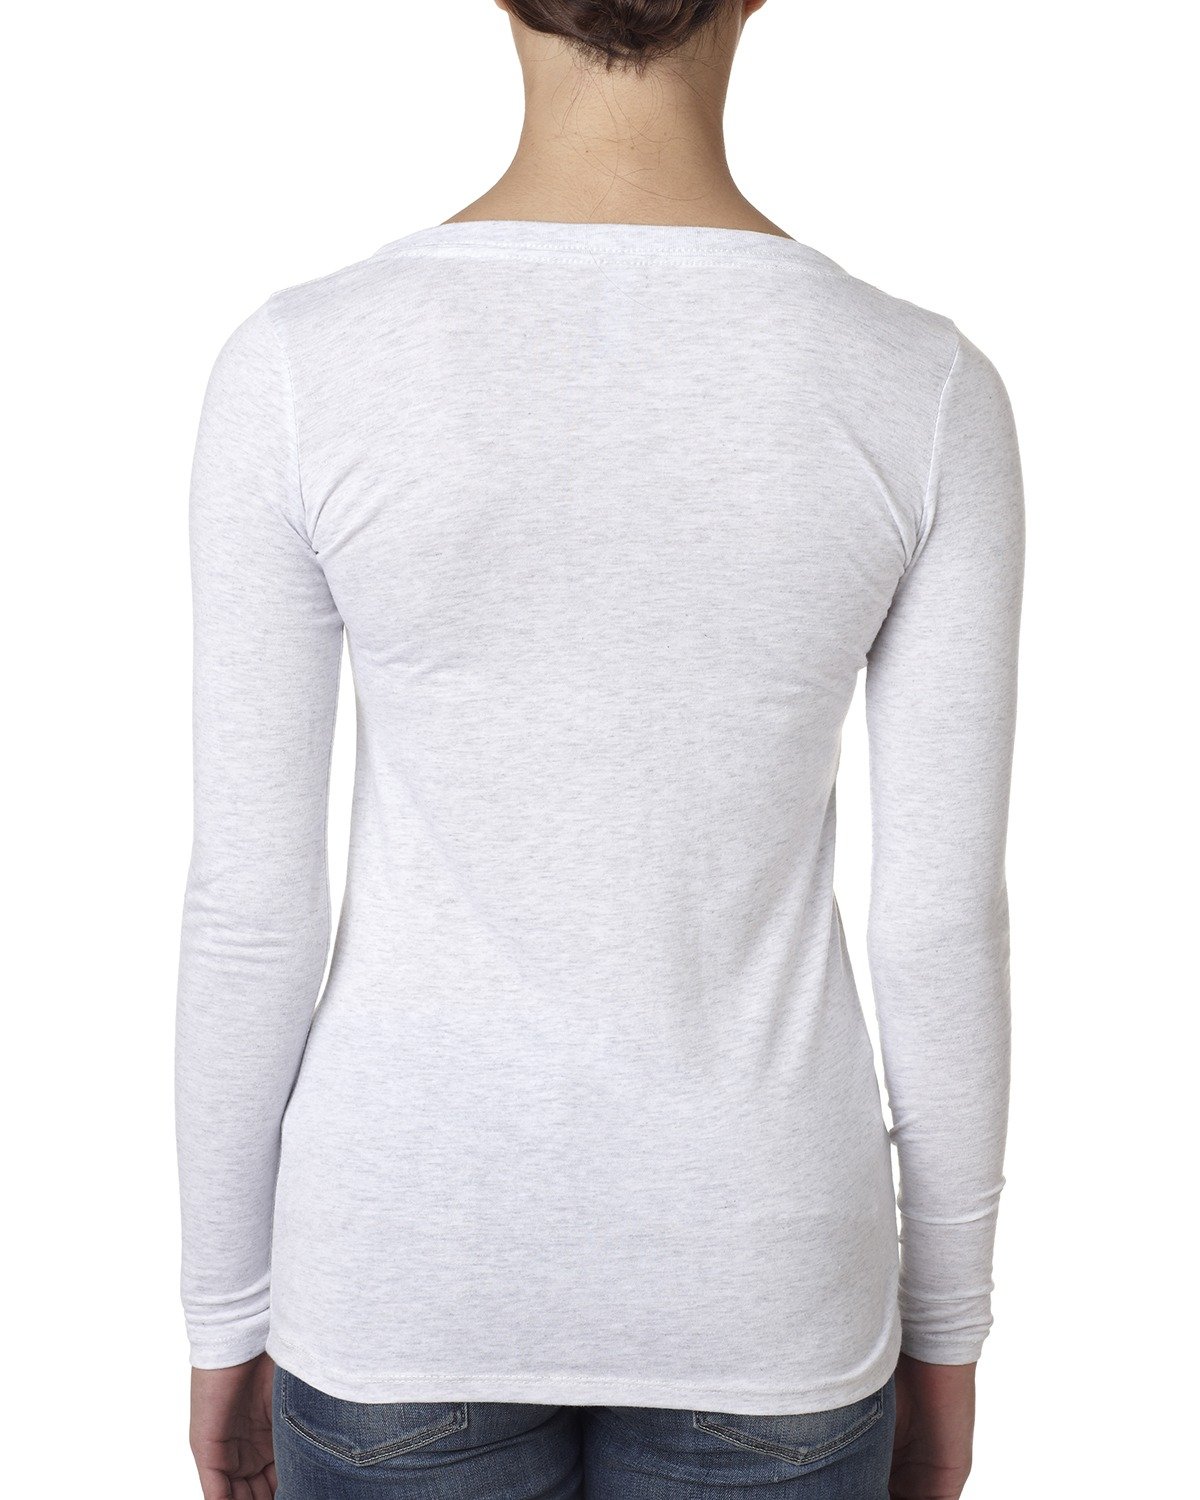 Next Level Women's Premium Fit Triblend Long Sleeve Scoop Neck T-Shirt M-6731 